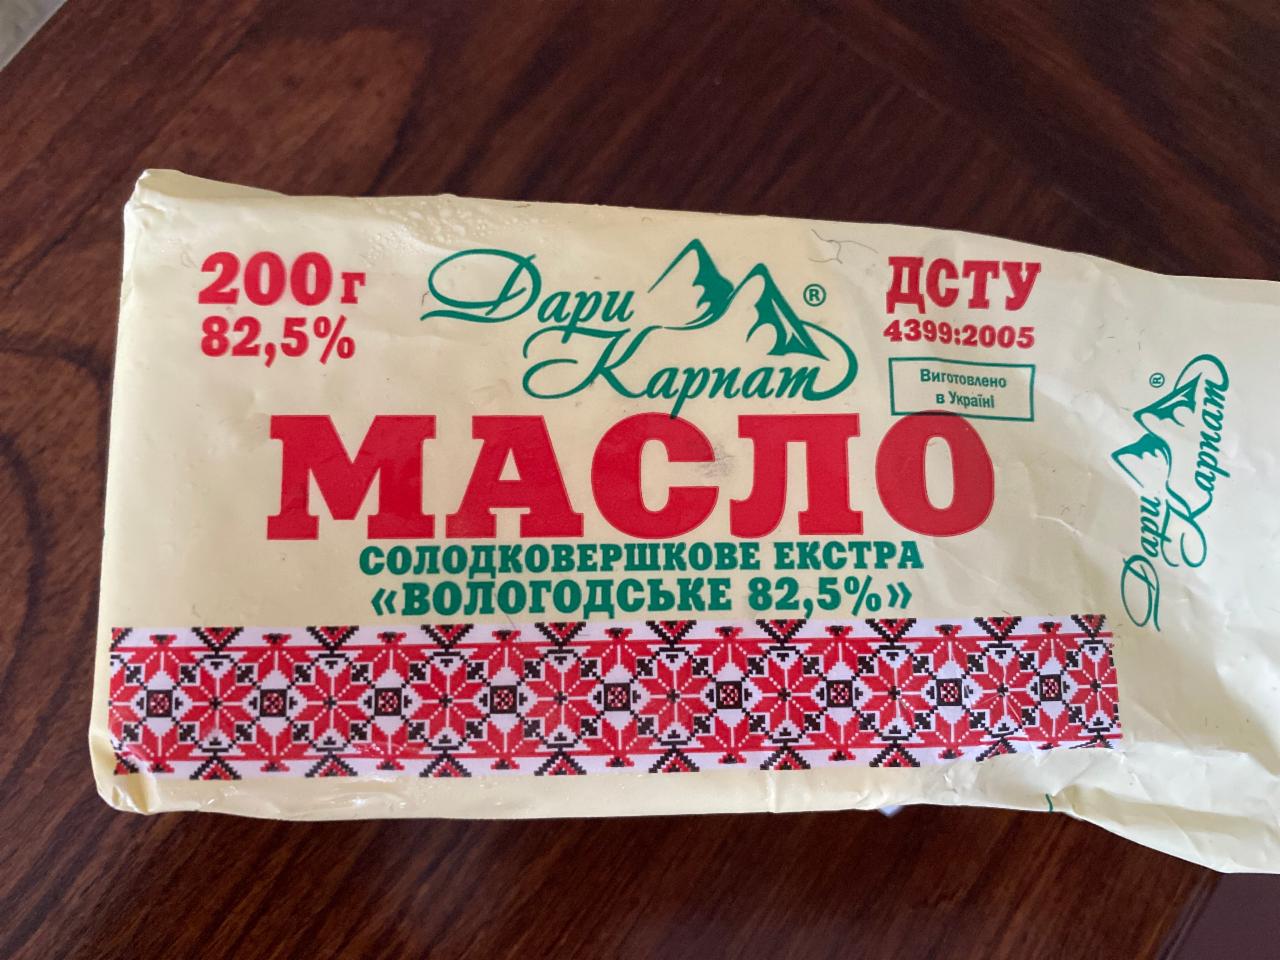 Фото - Масло солодковершкове 82.5% Вологодське Дари Карпат